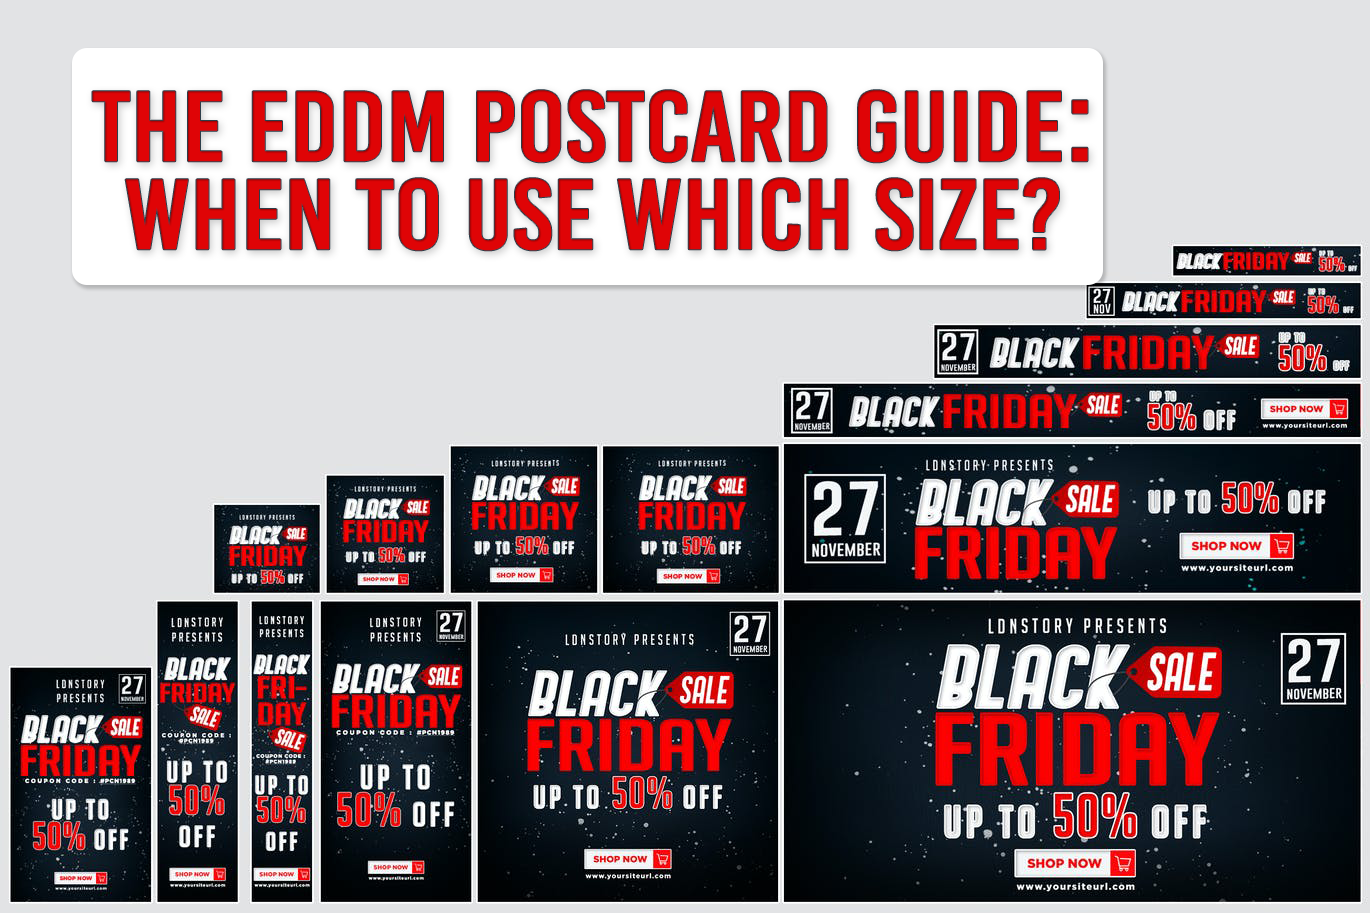 EDDM postcard size guide